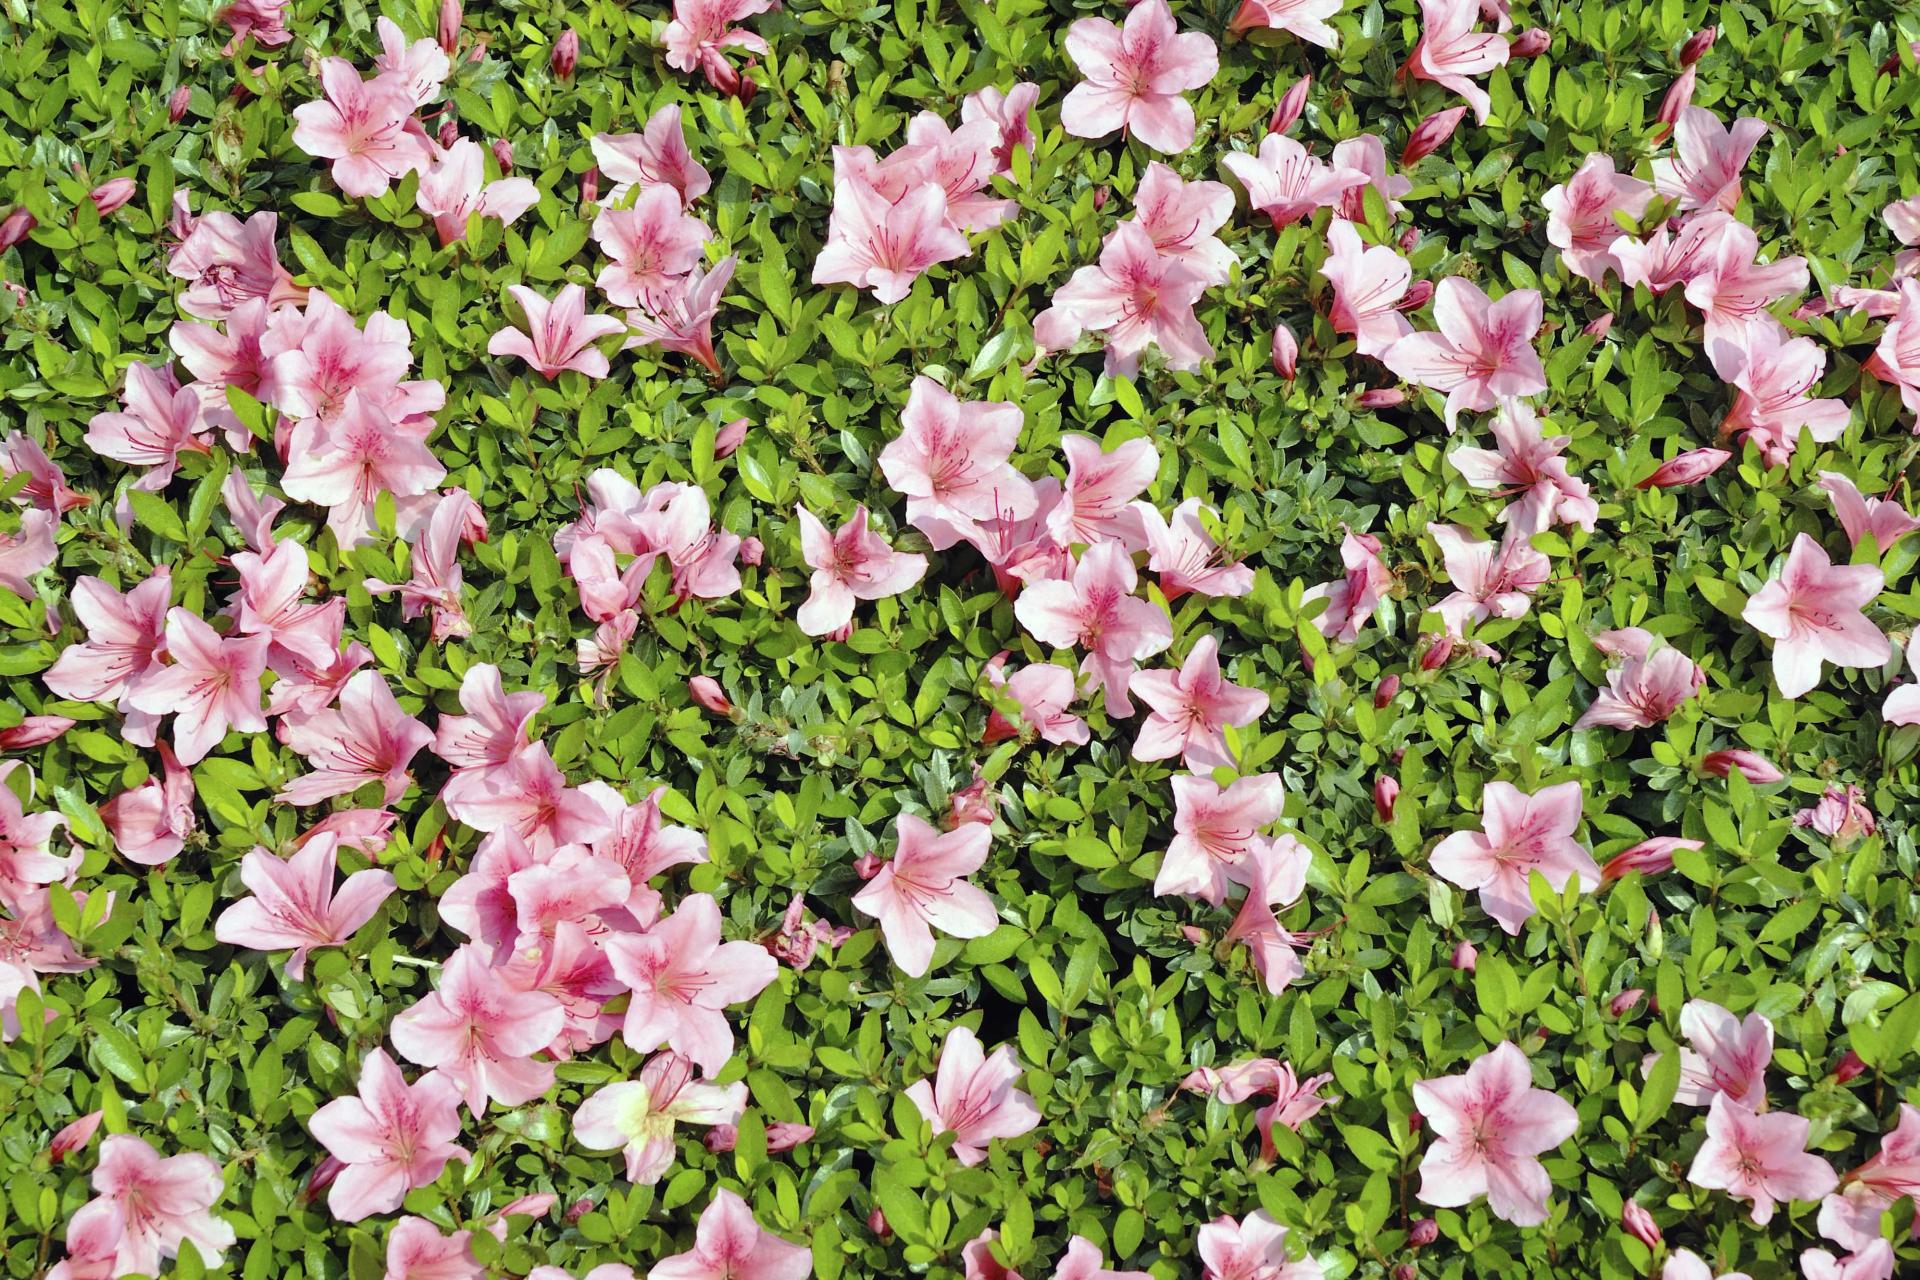 azalea-shrub-with-pink-flowers